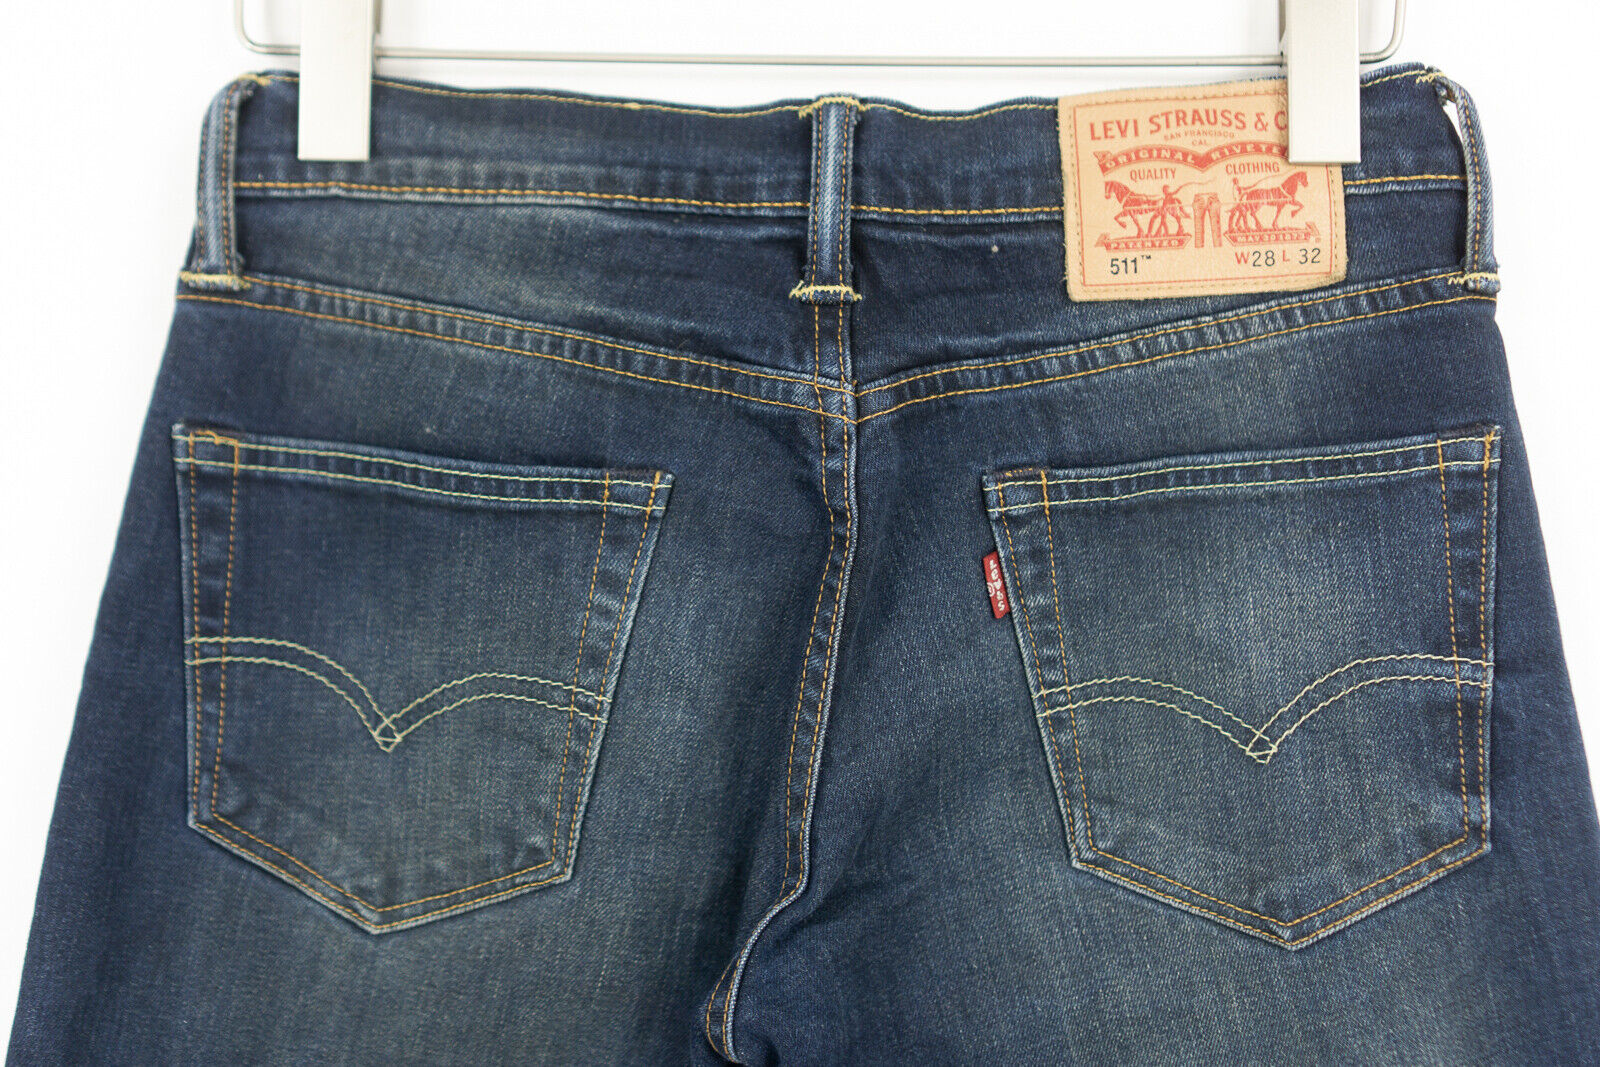 Levis 511 Slim Fit Jeans Stretch Blue Mens Size W28 L32 | eBay